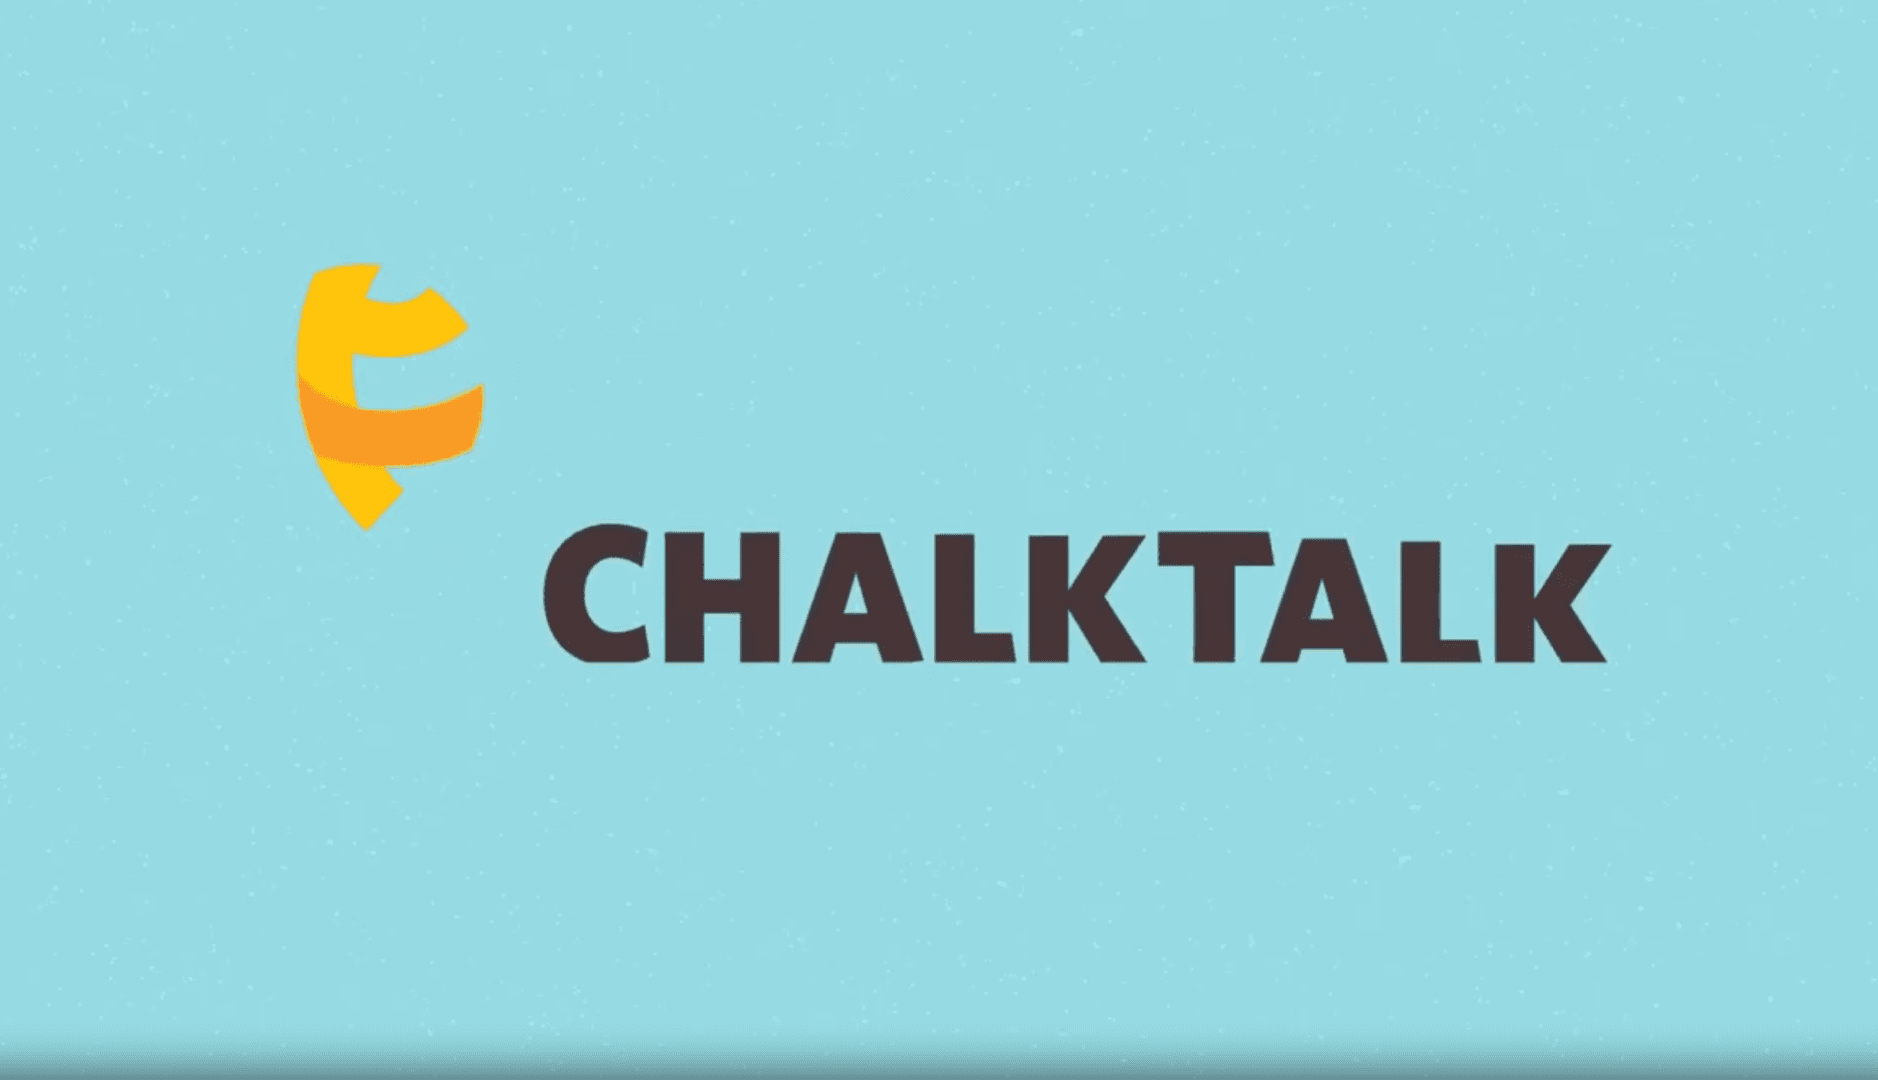 Yellow ChalkTalk logo with blue background.